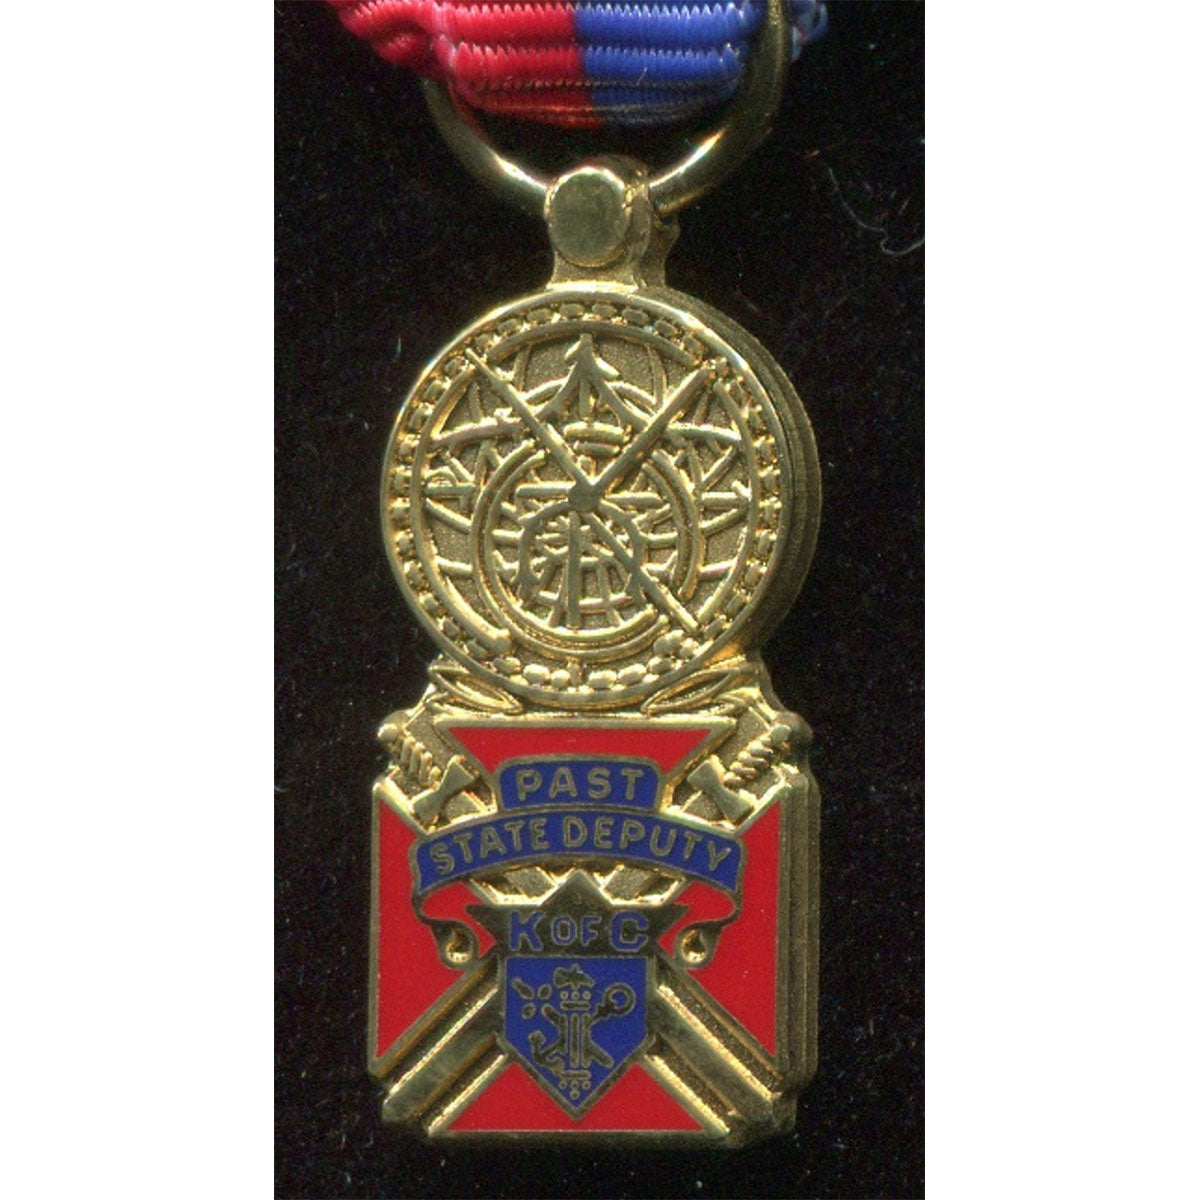 Medalla de Diputado de Estado Pasado con Listón Rojo/Azul